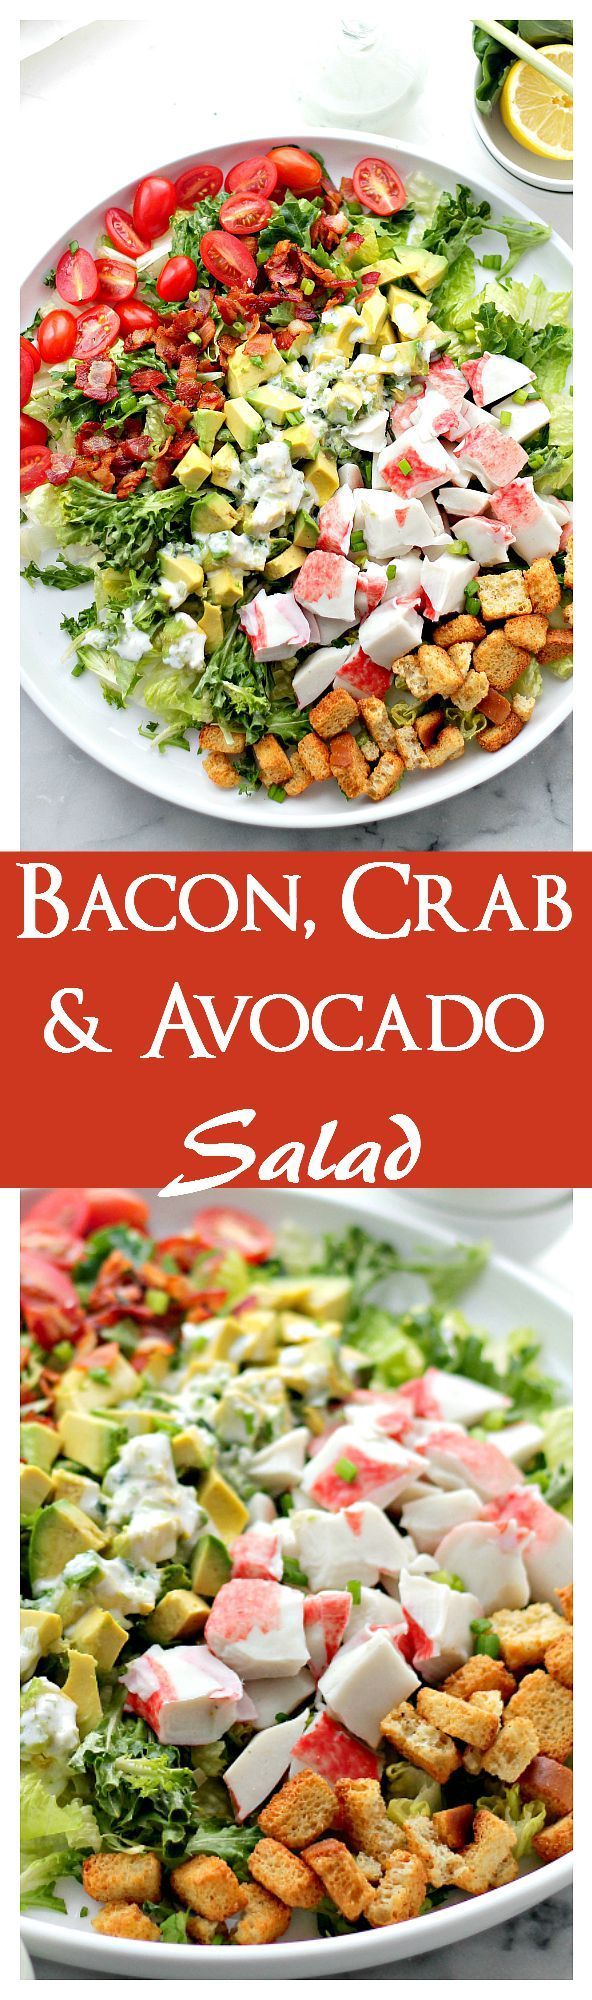 Bacon, Crab and Avocado Salad with Green Onion Yogurt Salad Dressing